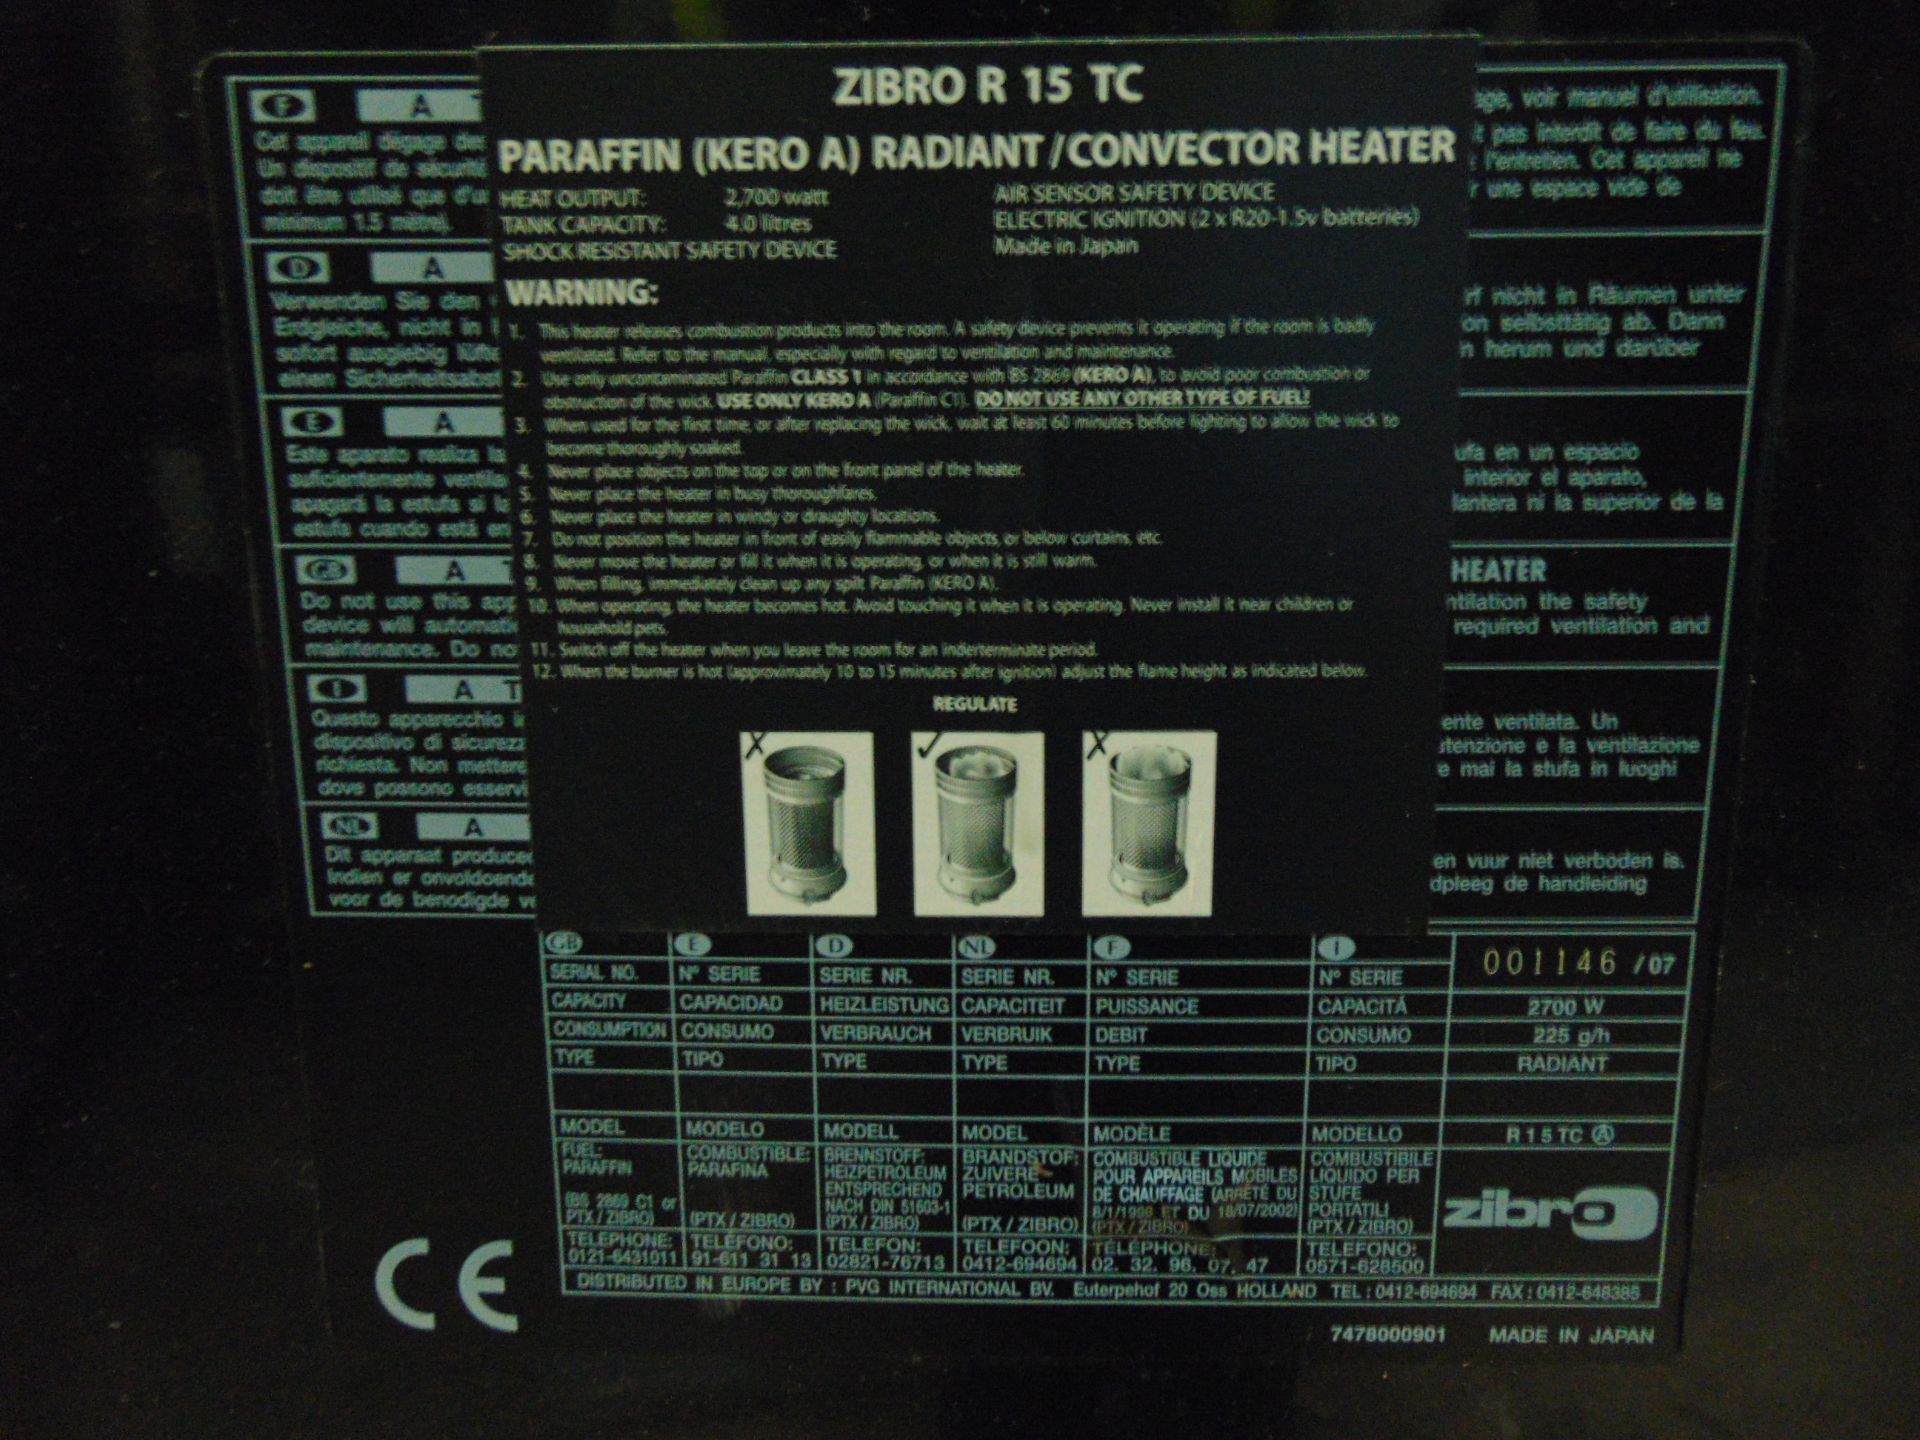 2 x Zibro R 15 TC Paraffin / Kerosene Heater. - Image 6 of 6